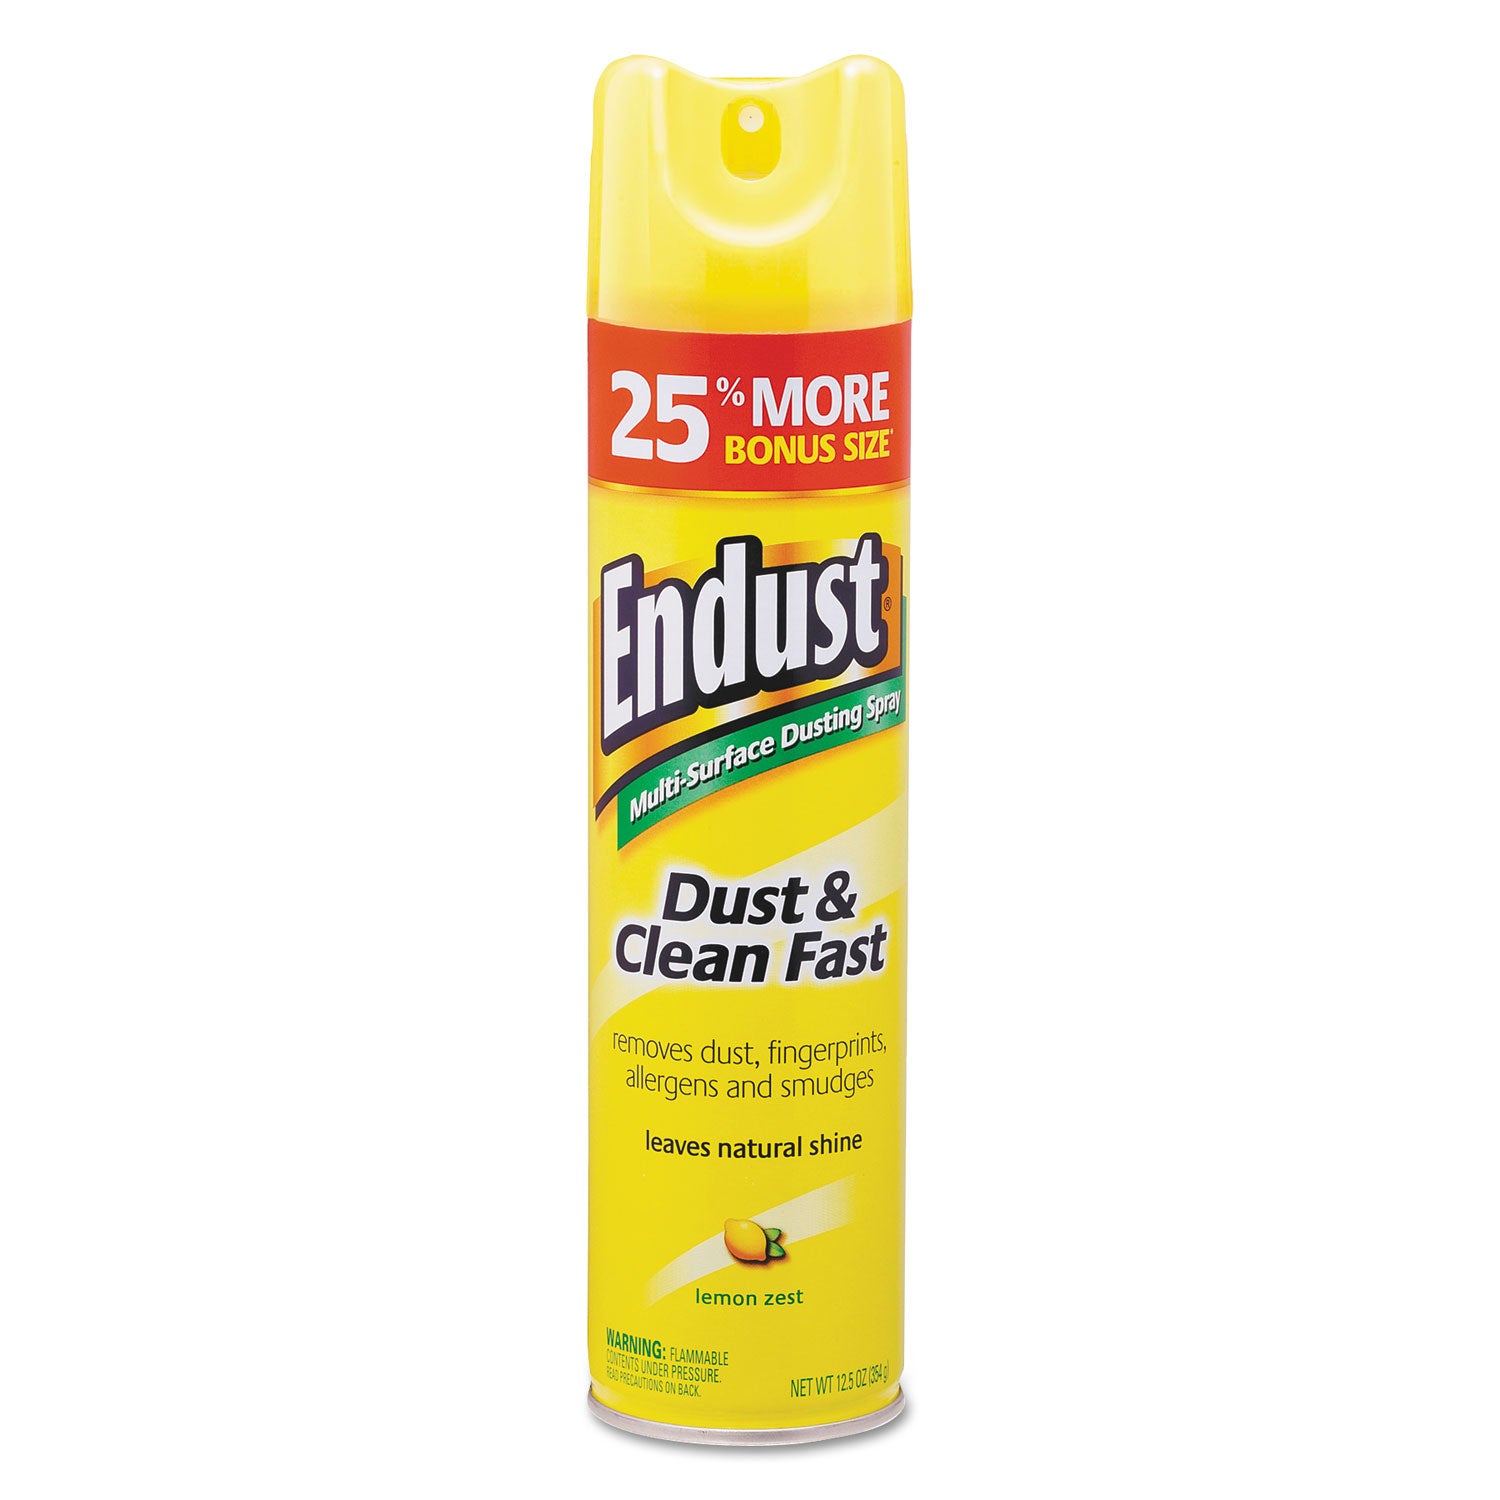 endust-multi-surface-dusting-and-cleaning-spray-lemon-zest-125-oz-aerosol-spray_dvocb508171ea - 1